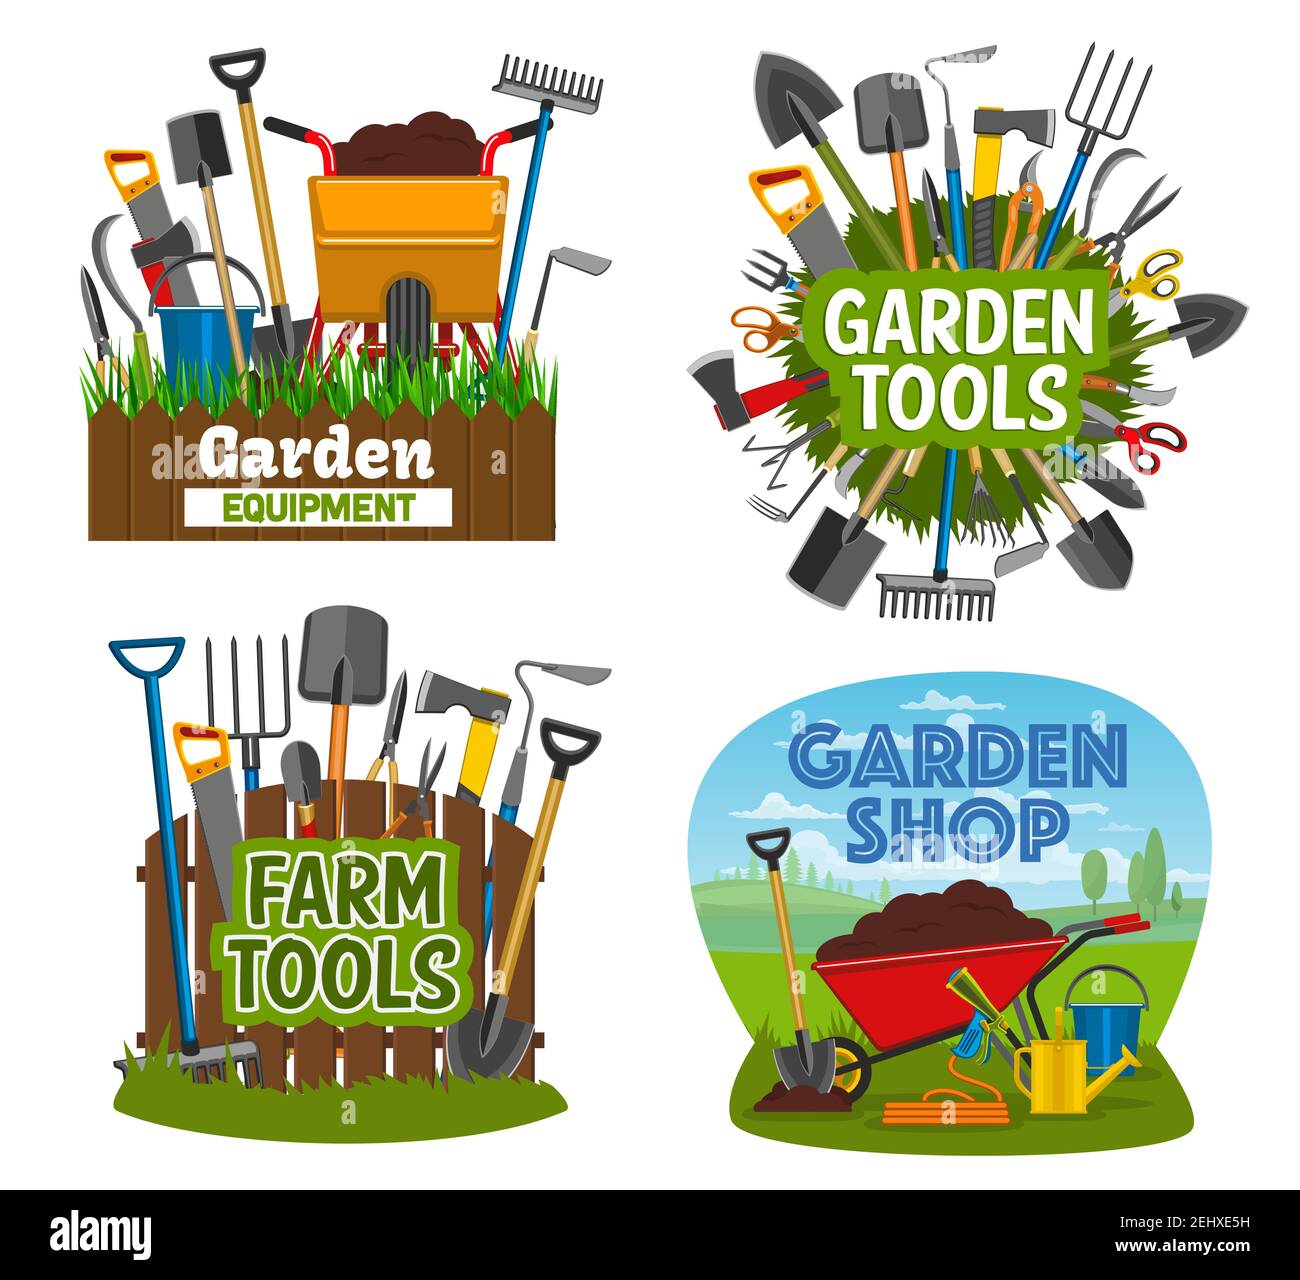 Gardening tools and equipment isolated posters. Garden shop items shovel, spade, rake and pruner, trowel and fork, scissors, pitchfork. Wheelbarrow, c Stock Vector